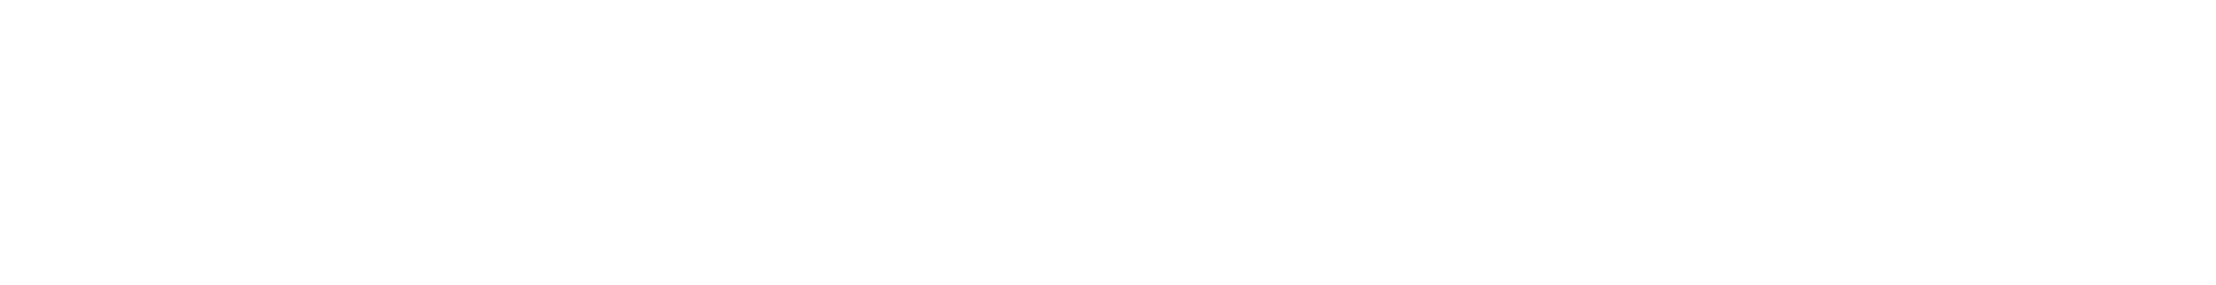 Whistler Logo